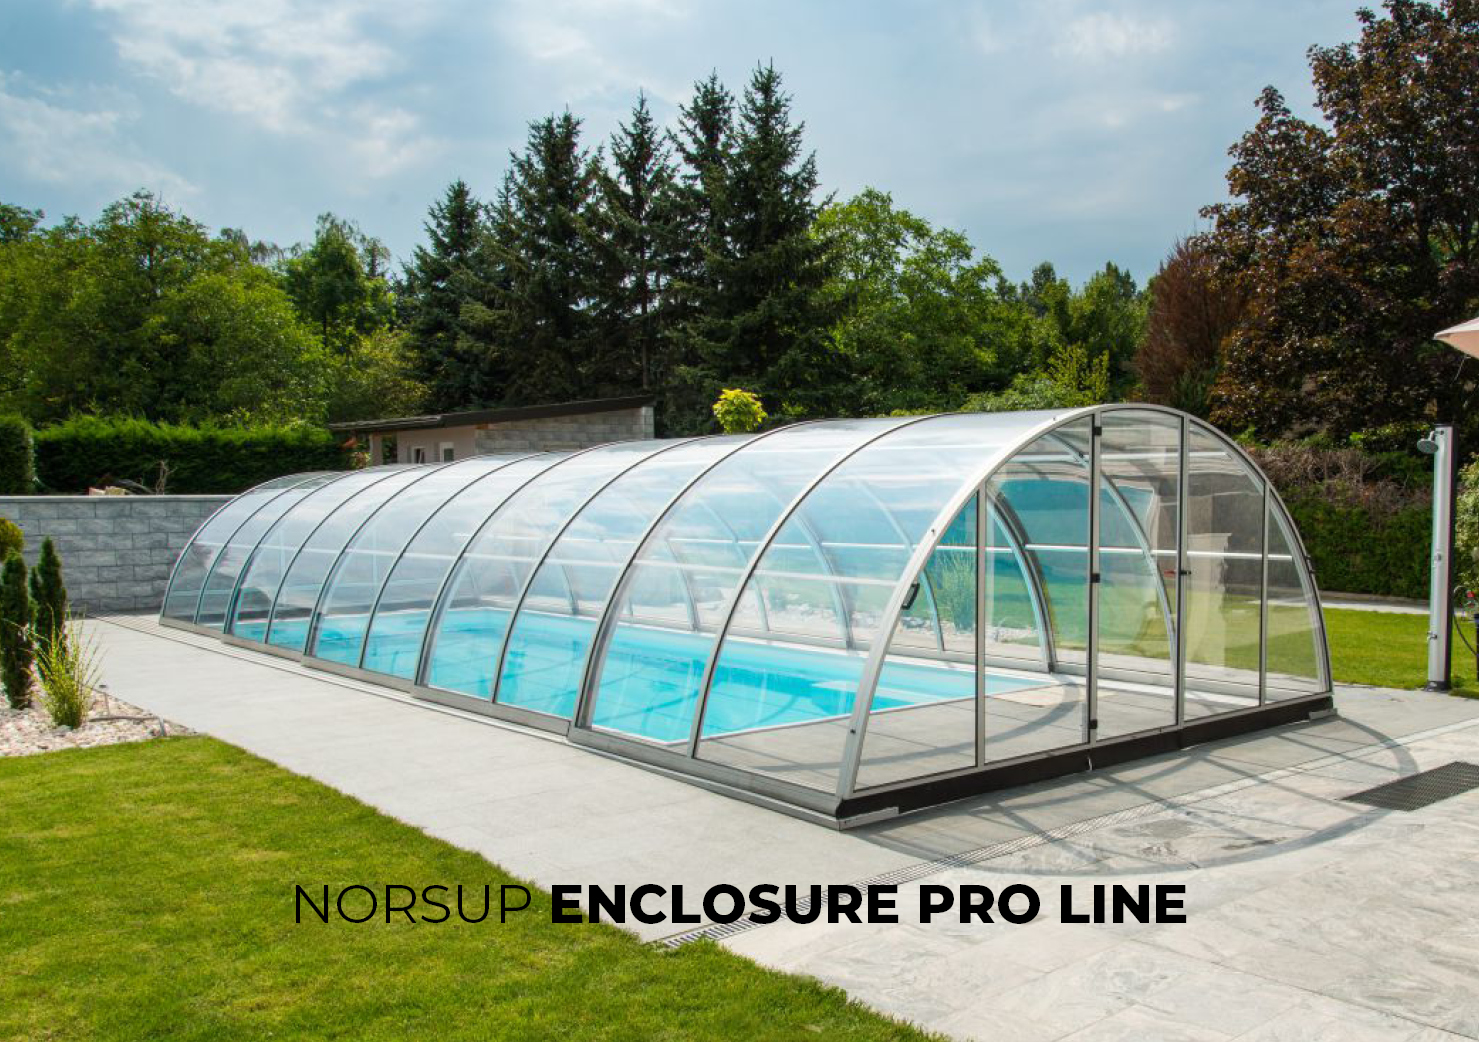 Norsup enclosure Pro line